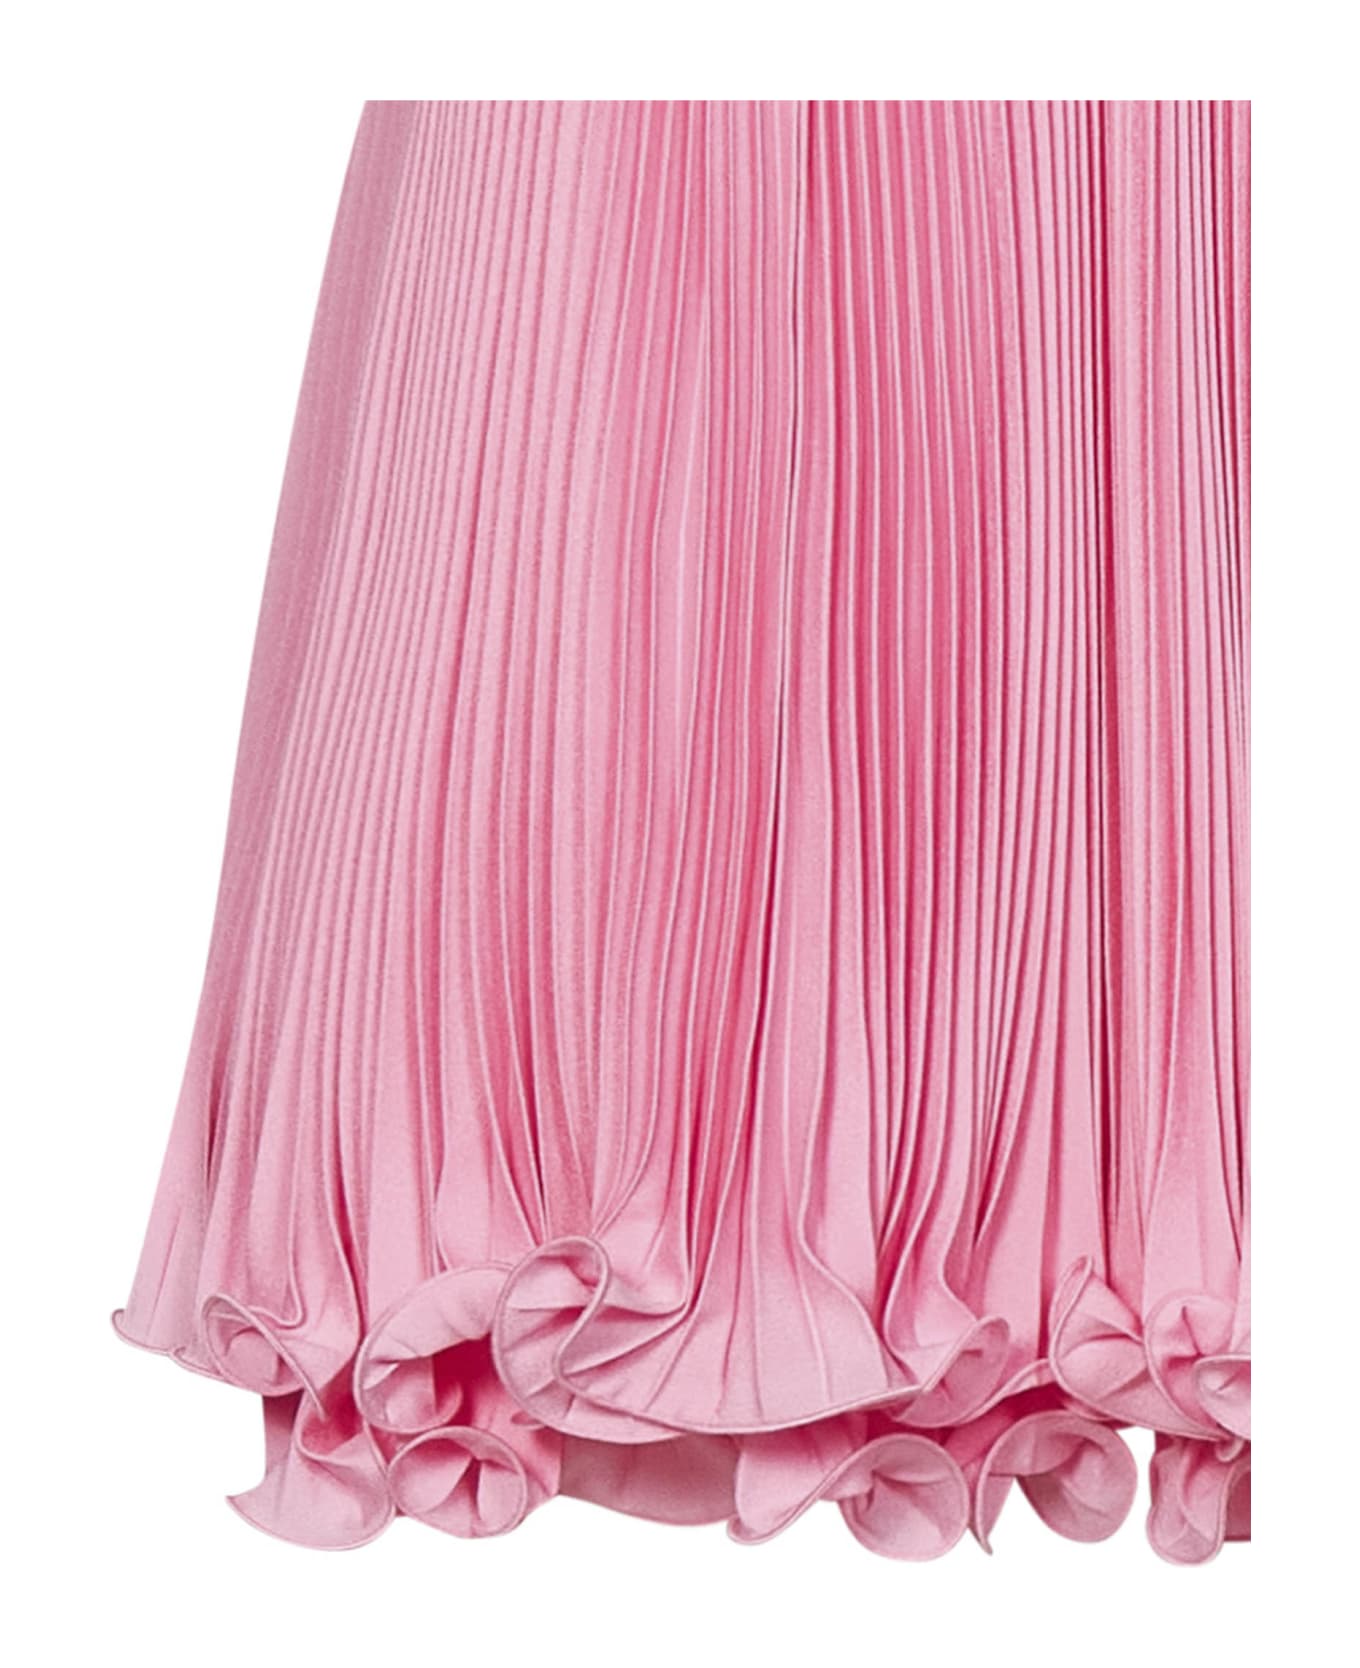 Balmain Mini Skirt - Pink スカート